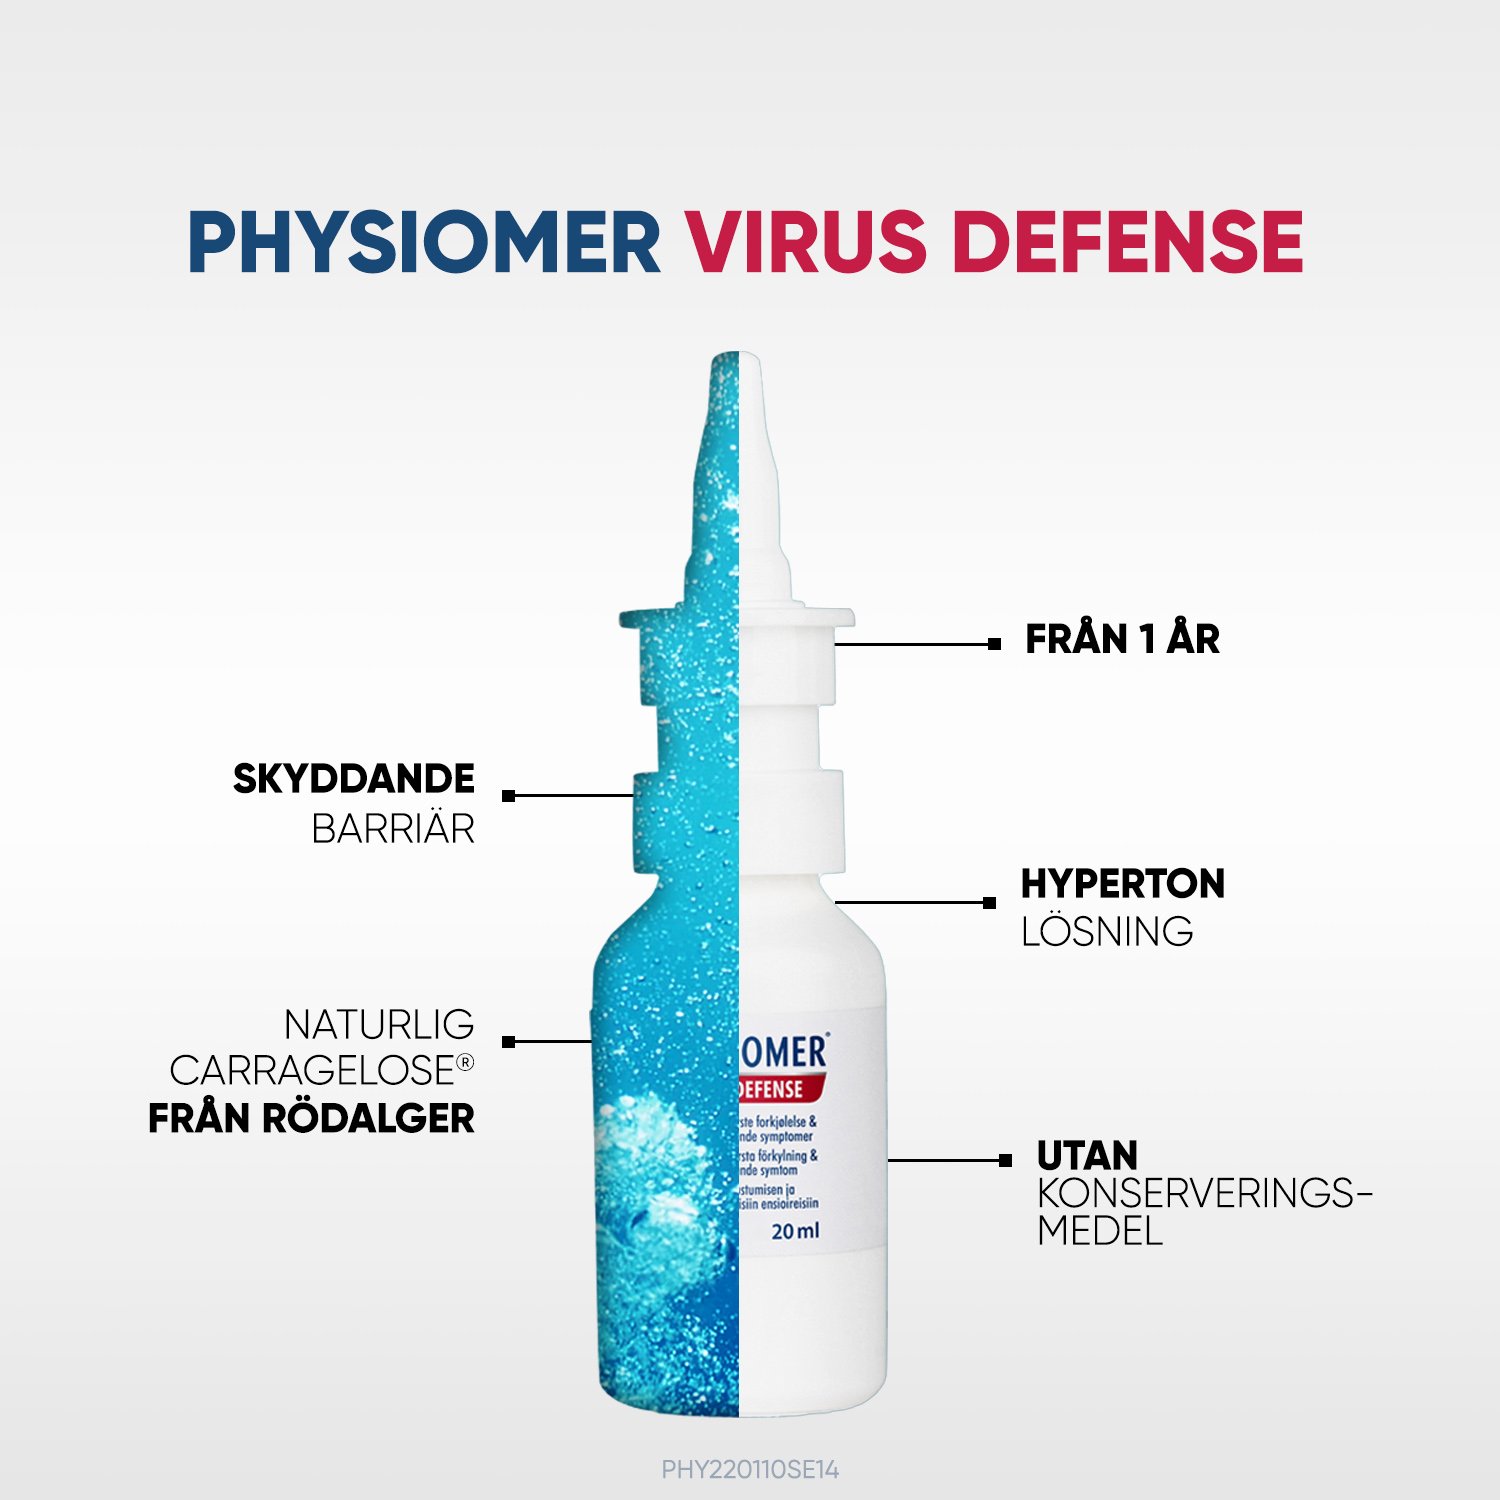 Physiomer Virus Defense Nässpray 20 ml